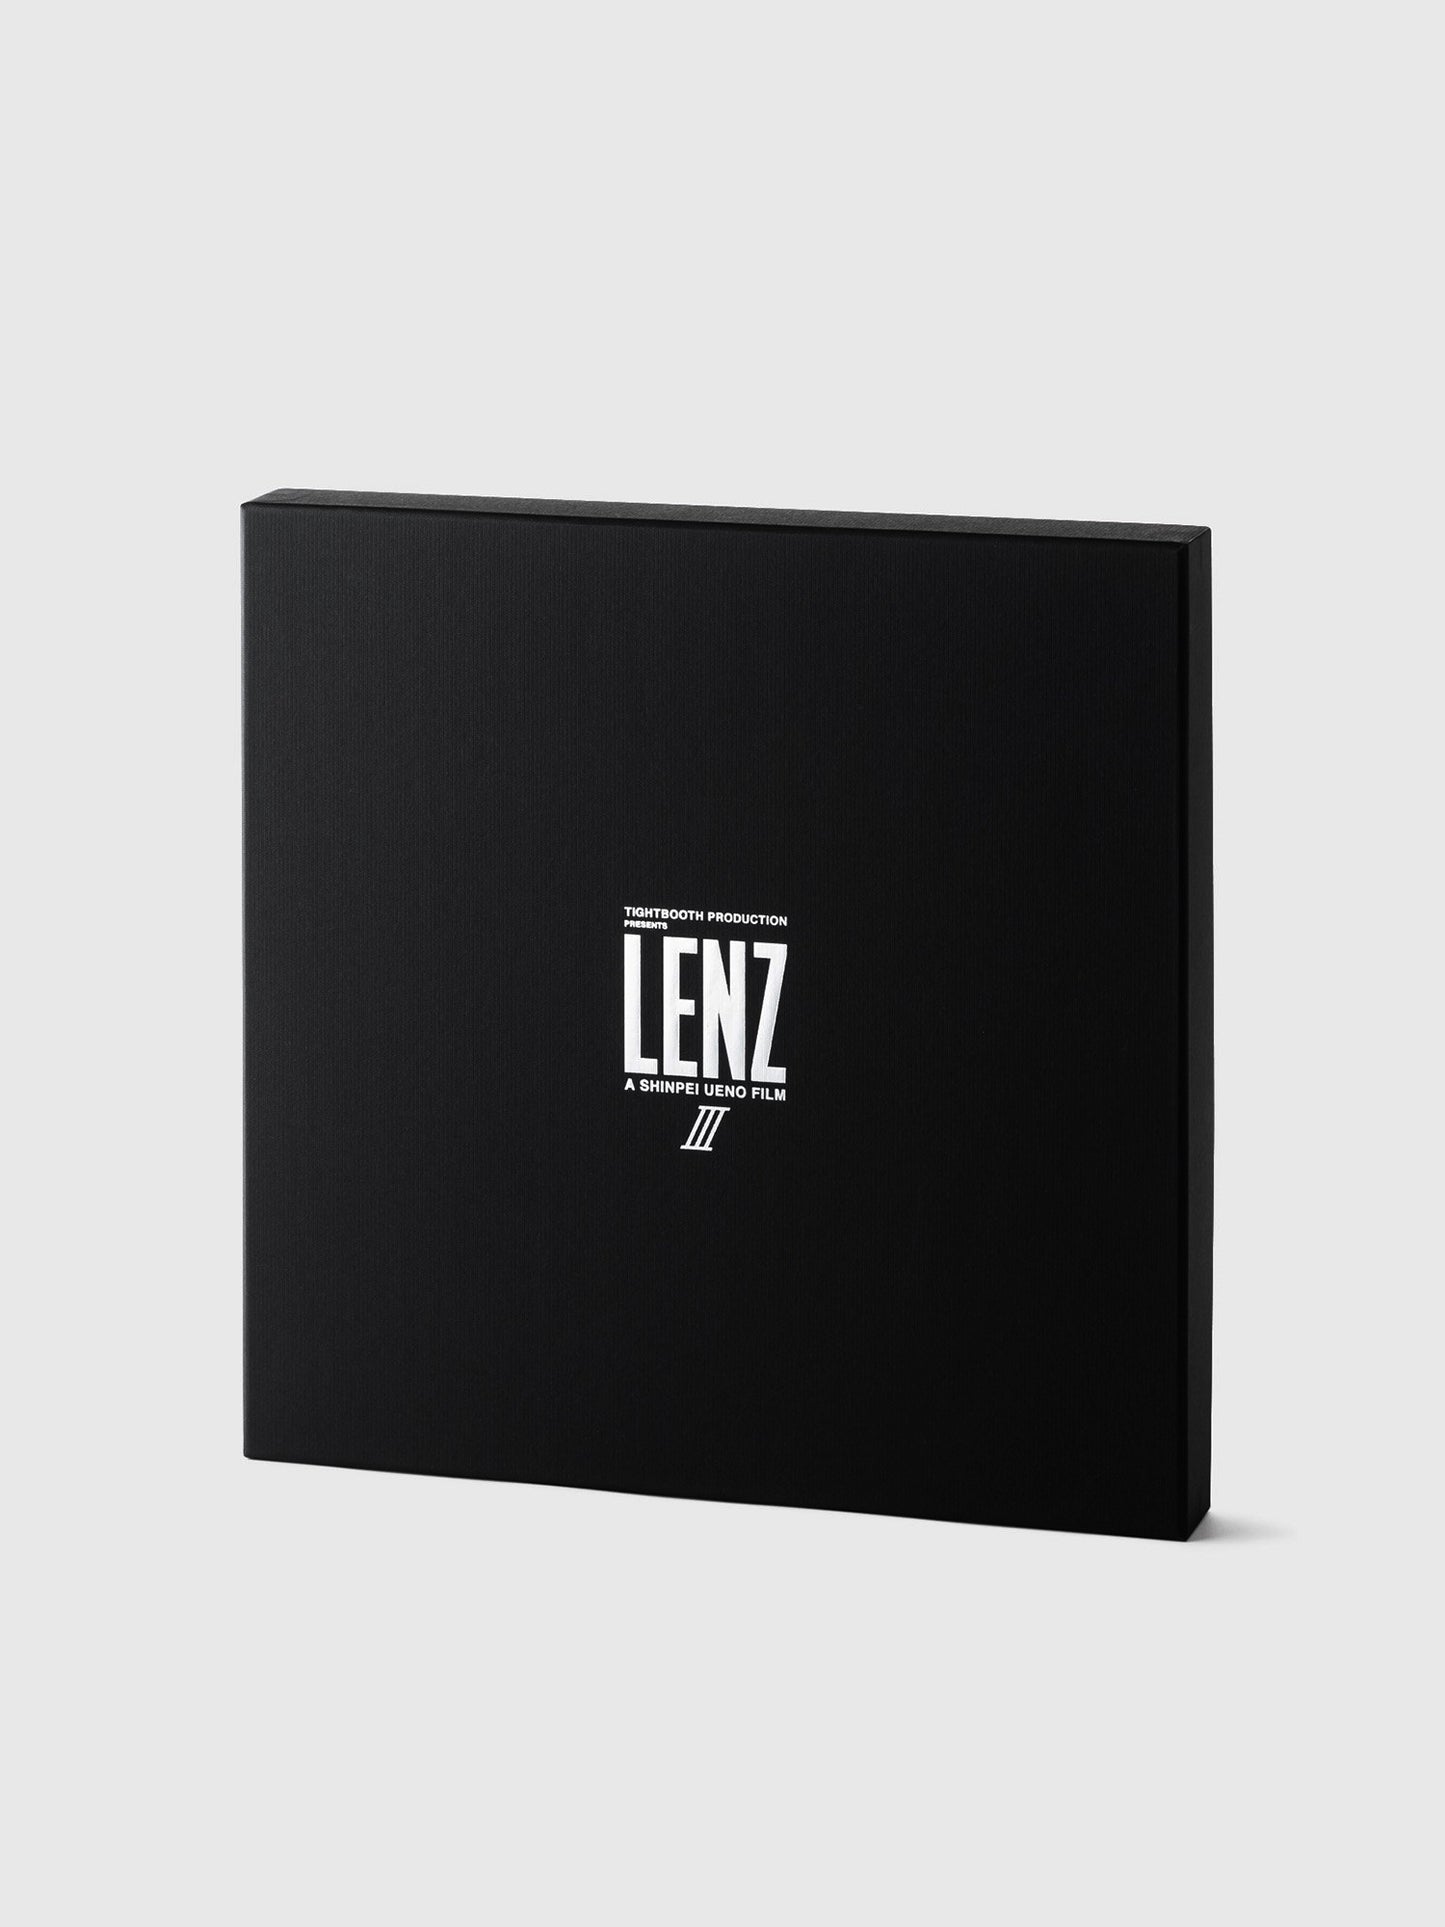 TIGHTBOOTH Lenz III オリジナルボックスセット - 限定版